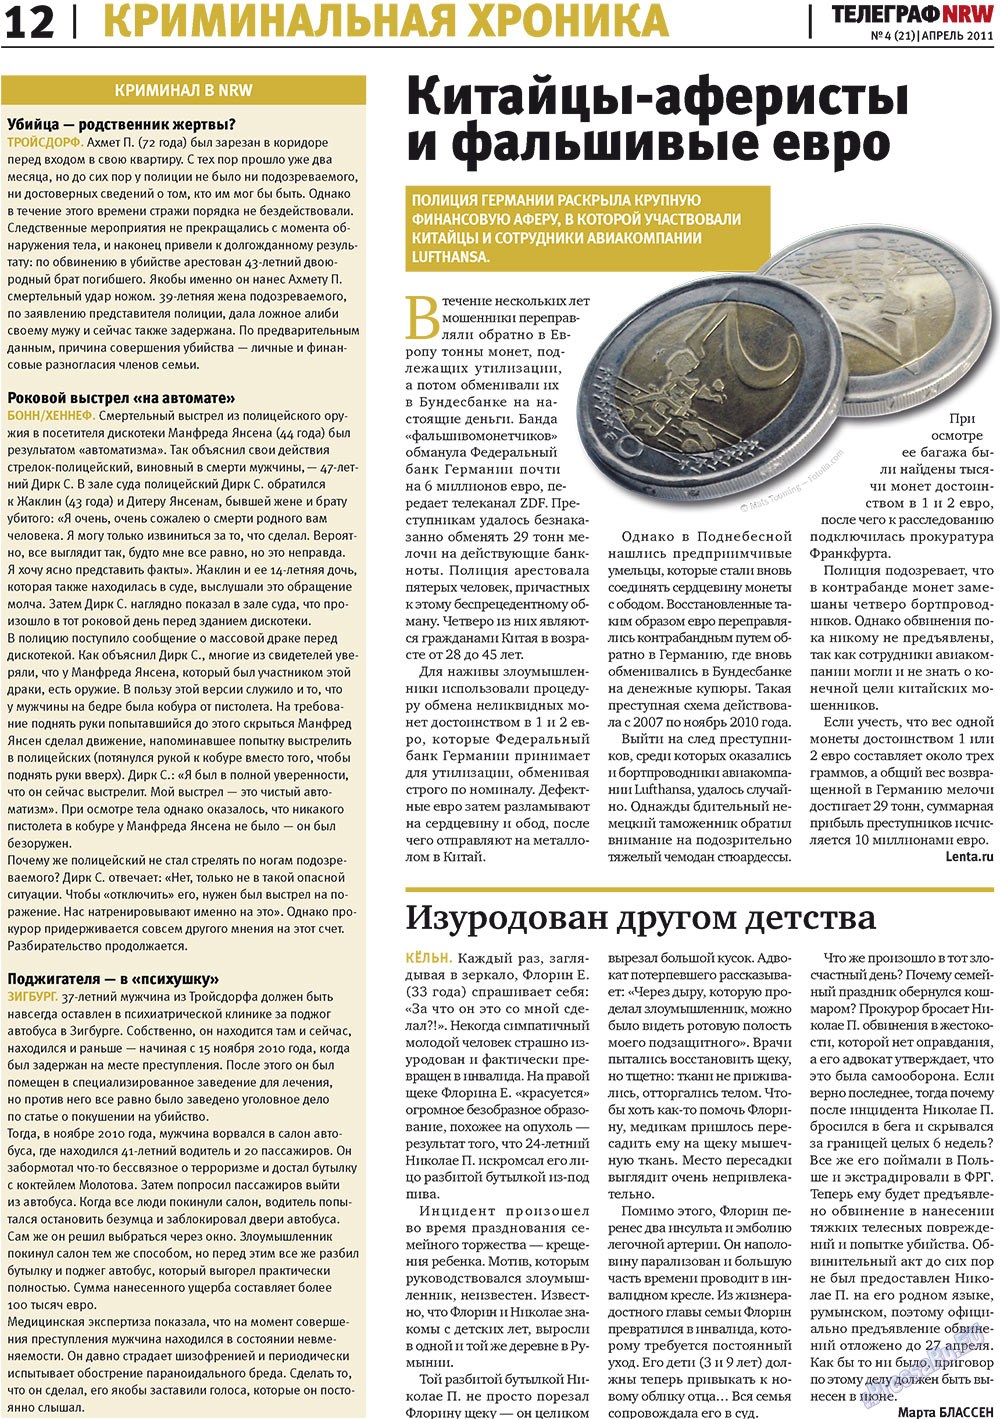 Телеграф NRW, газета. 2011 №4 стр.12